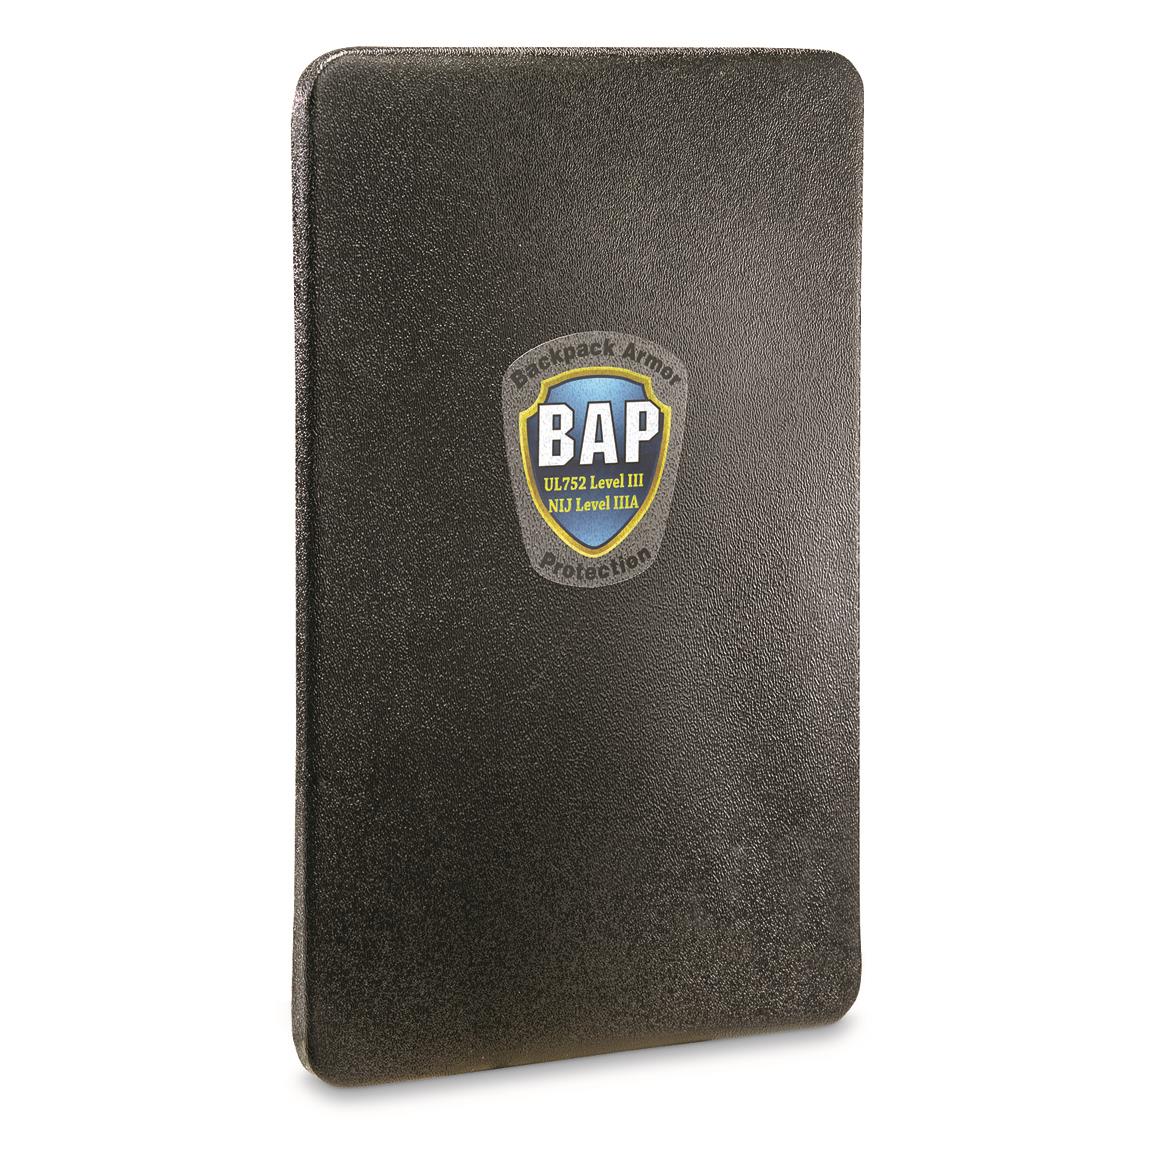 BAP Backpack Armor Protection Level IIIA Body Armor Plate, Black